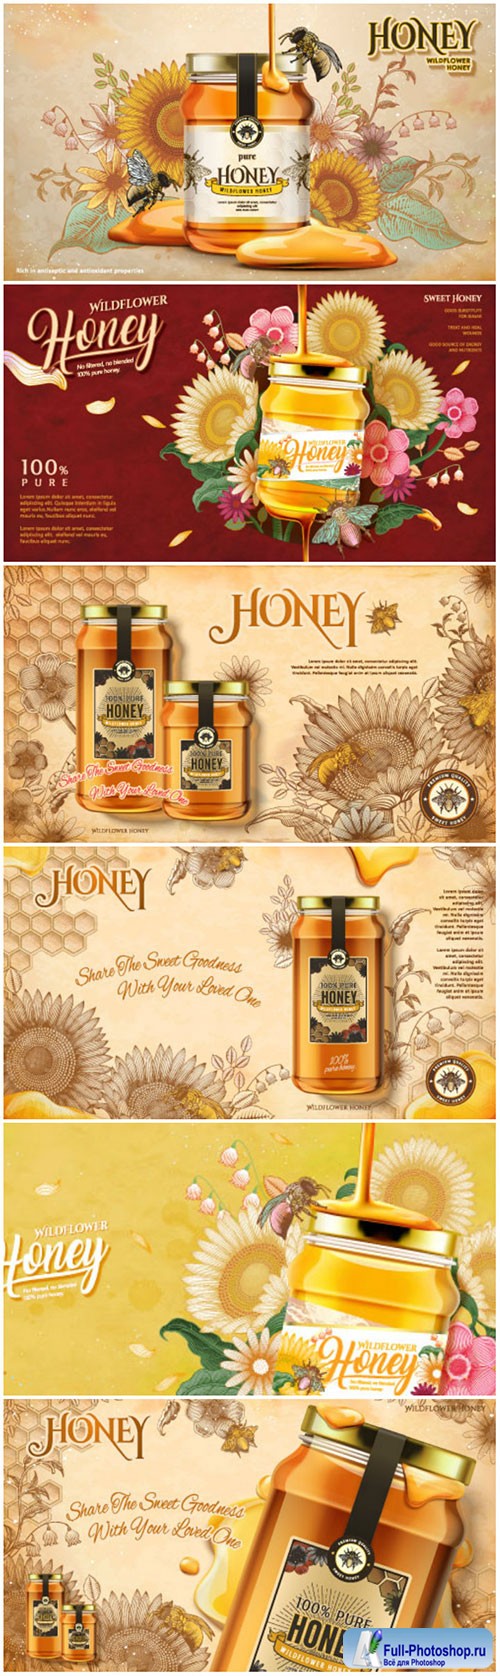 Wildflower honey vector ads